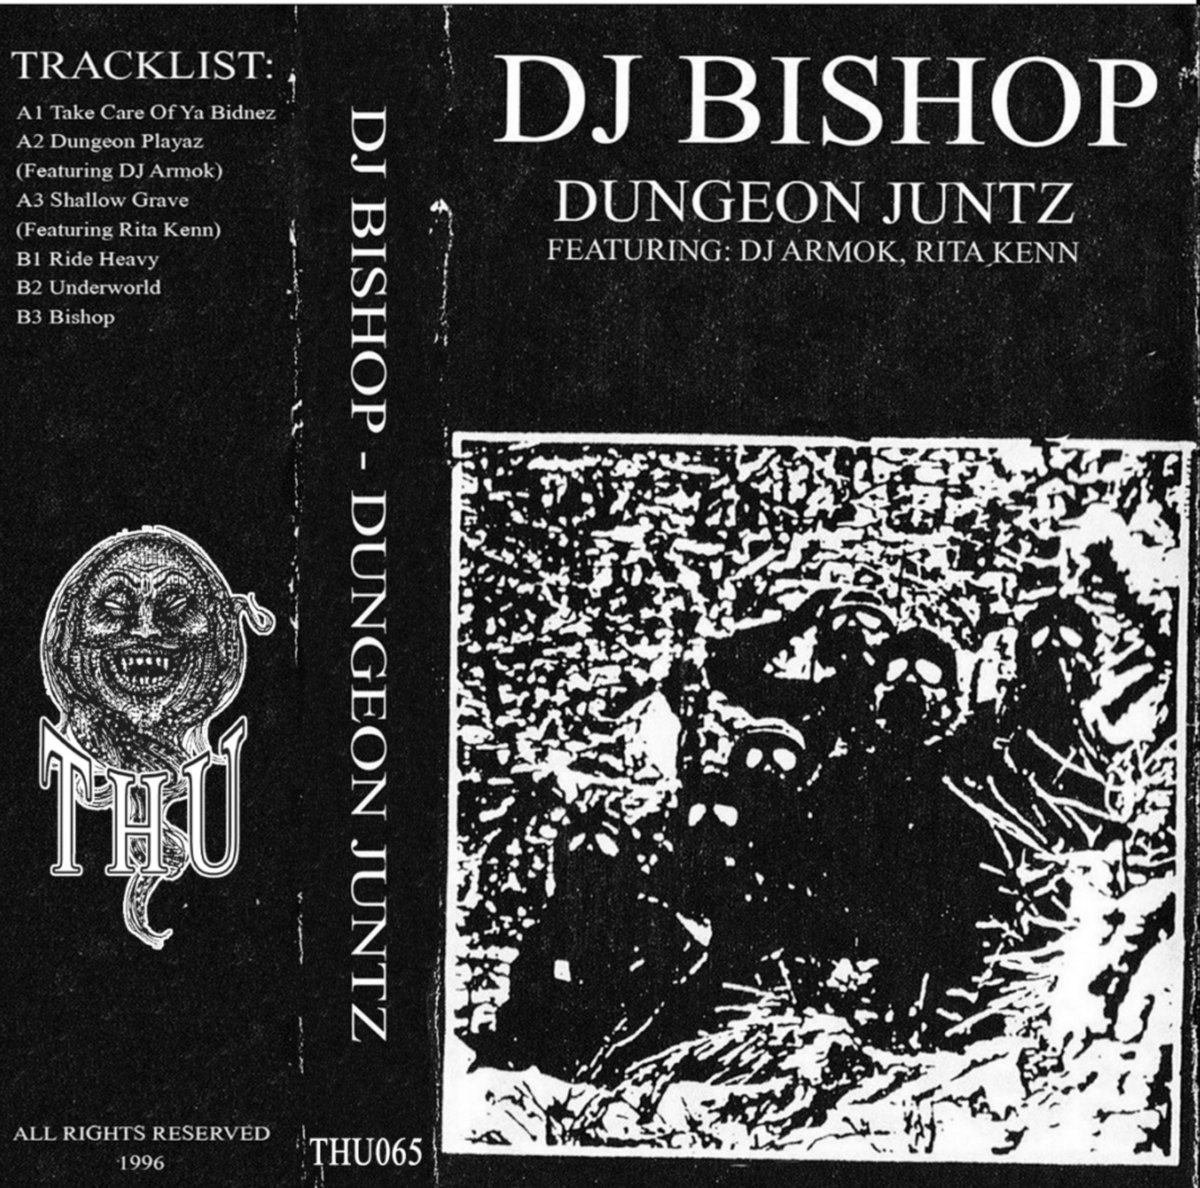 DJ Bishop-Dungeon Juntz-16BIT-WEBFLAC-2021-ESGFLAC